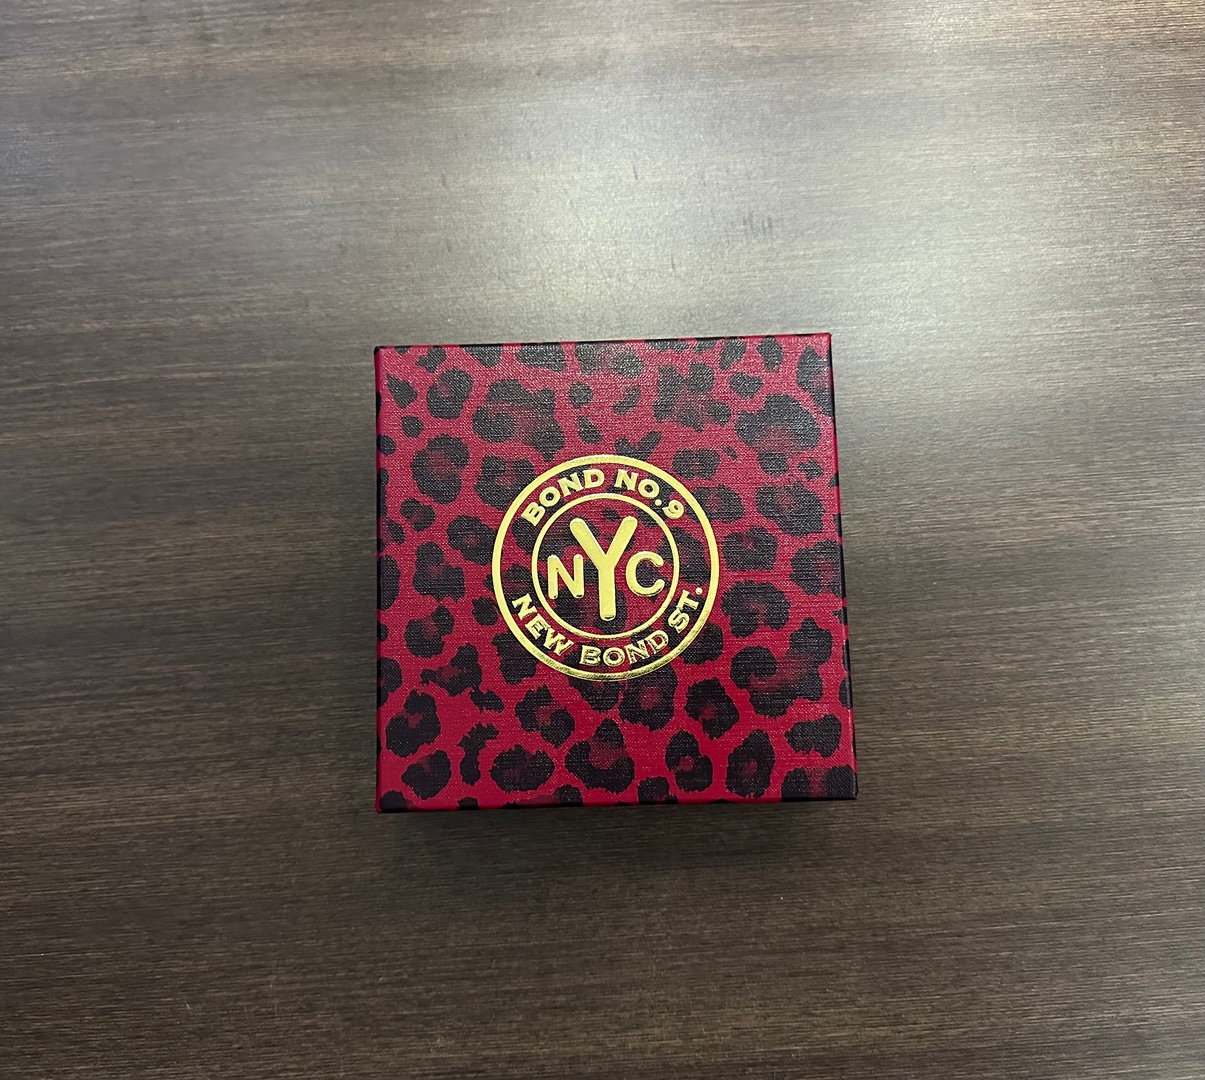 joyas, relojes y accesorios - Perfume New Bond ST. Bond NO.9 NYC 100ML Nuevo, Original, RD$ 14,000 NEG 1